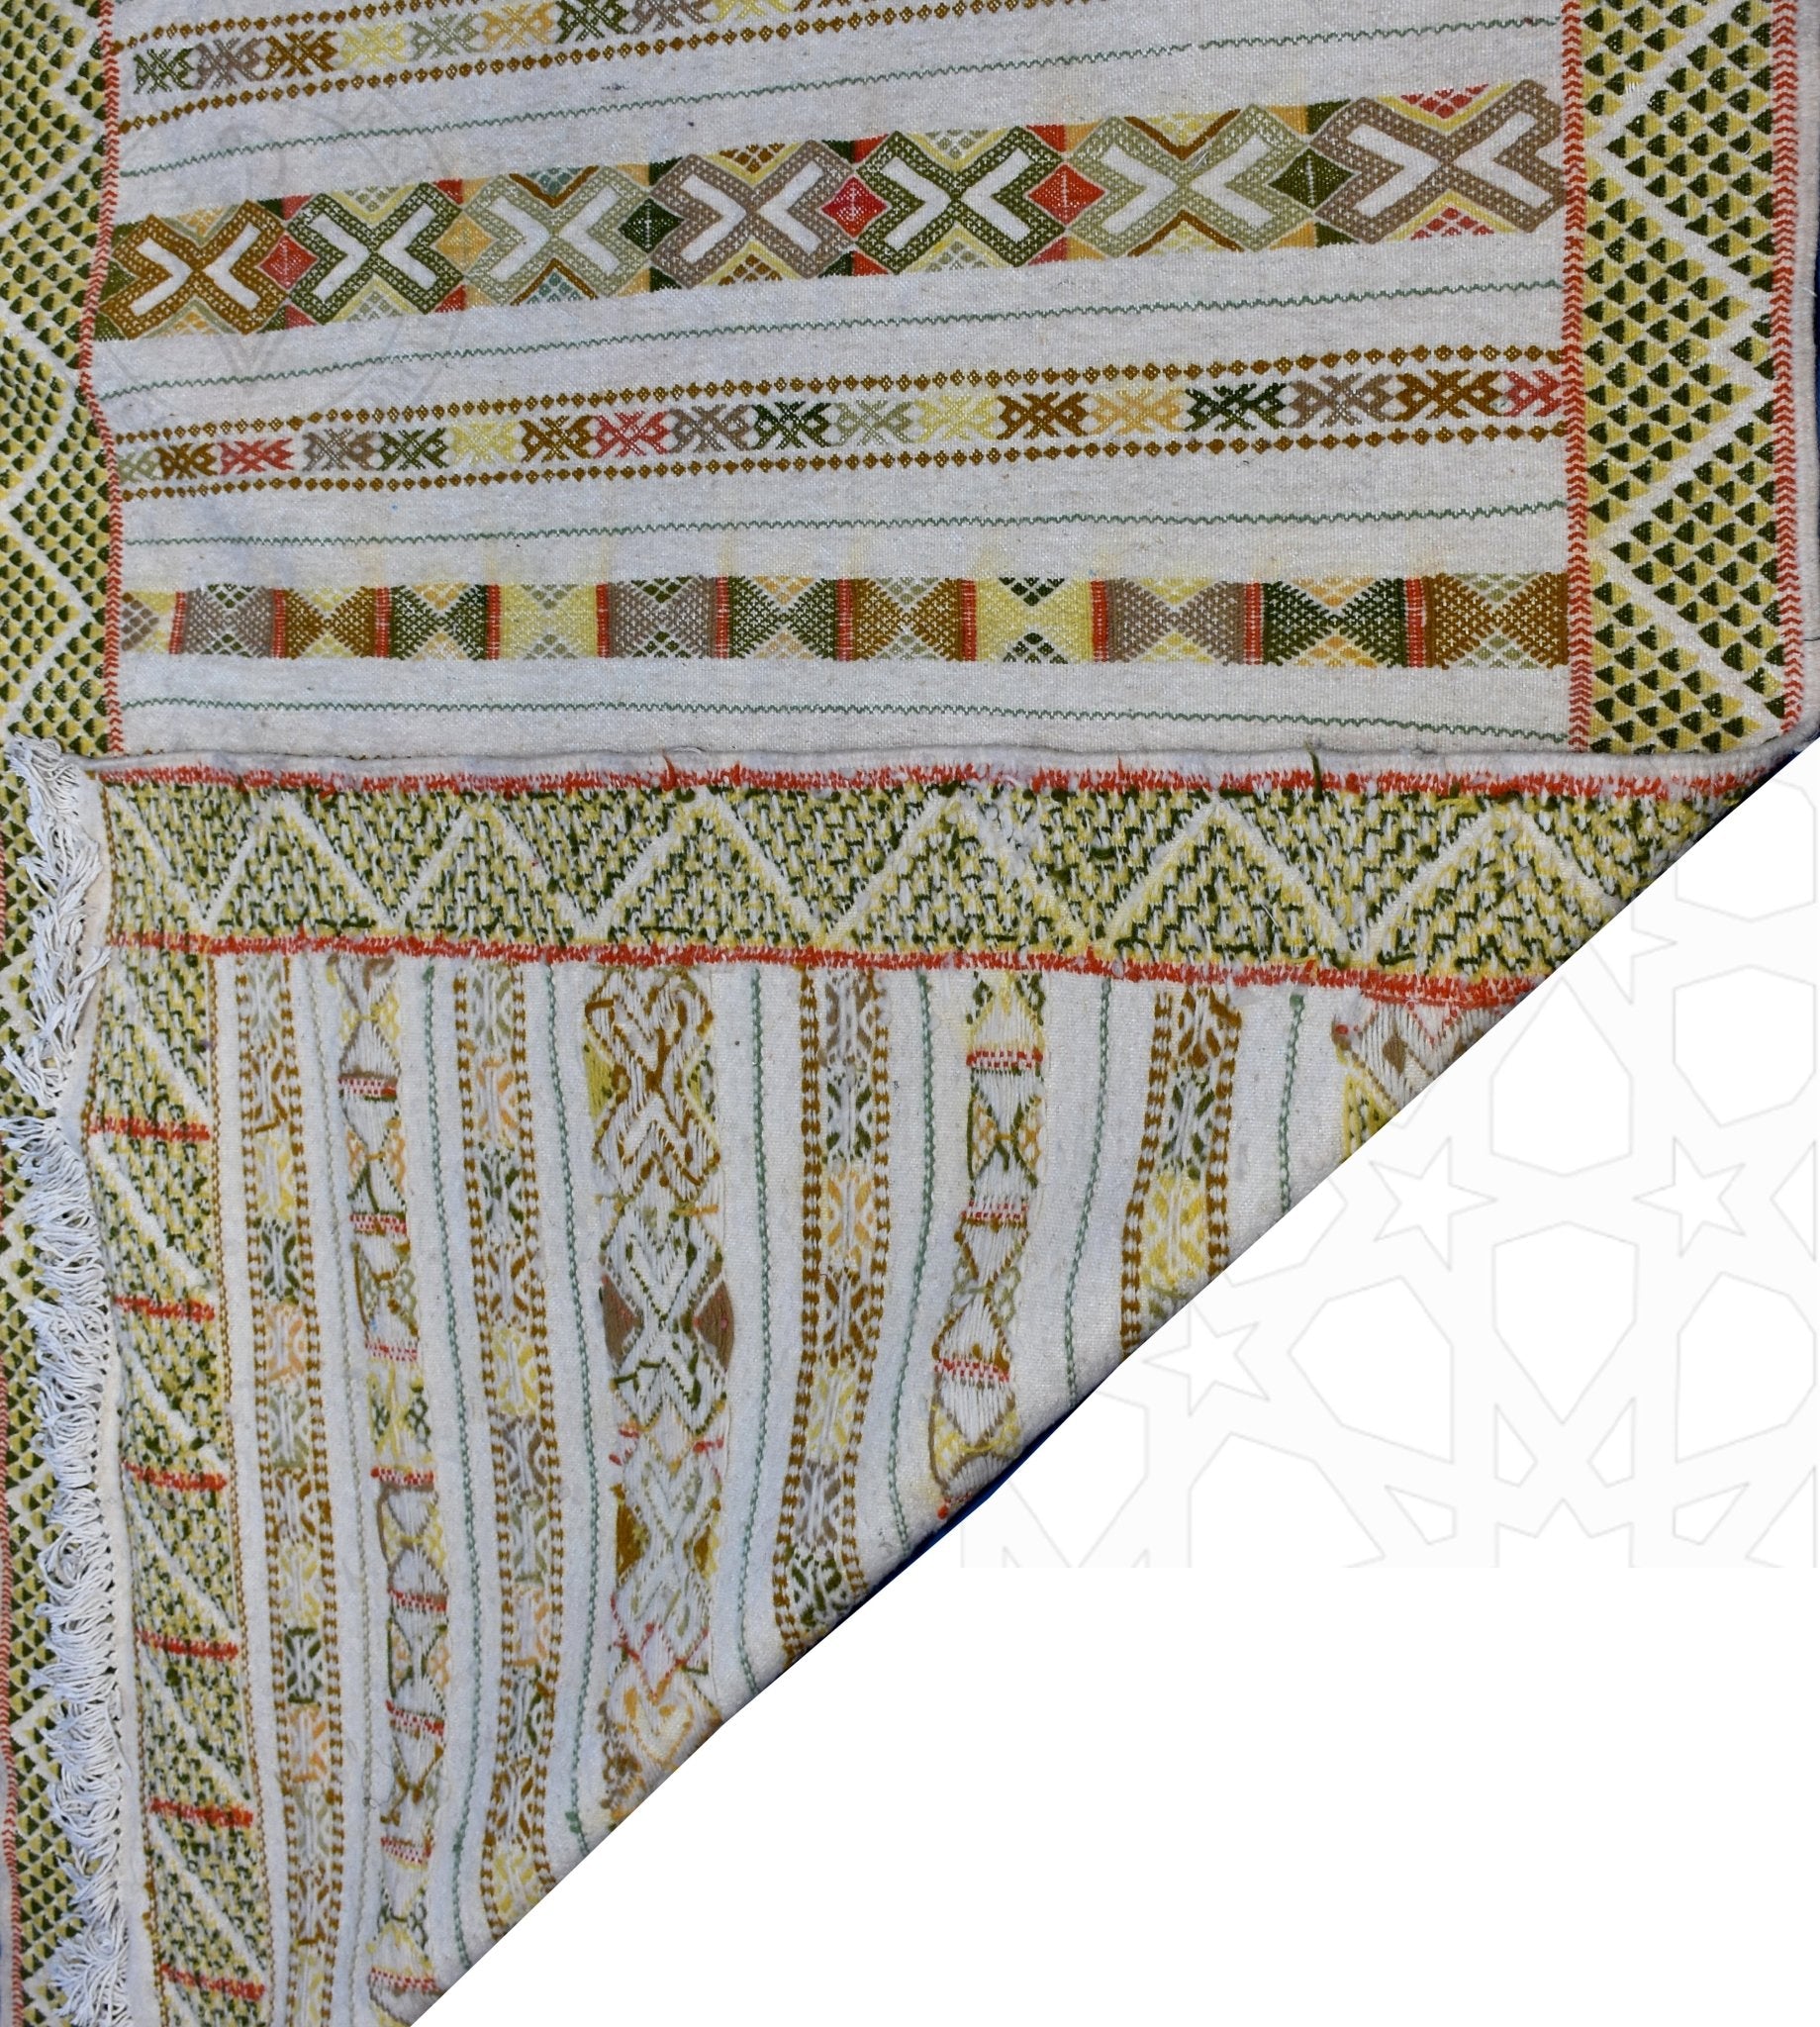 Flatweave kilim hanbal Moroccan rug - 3.61 x 5.25 ft / 110 x 160 cm - Berbers Market